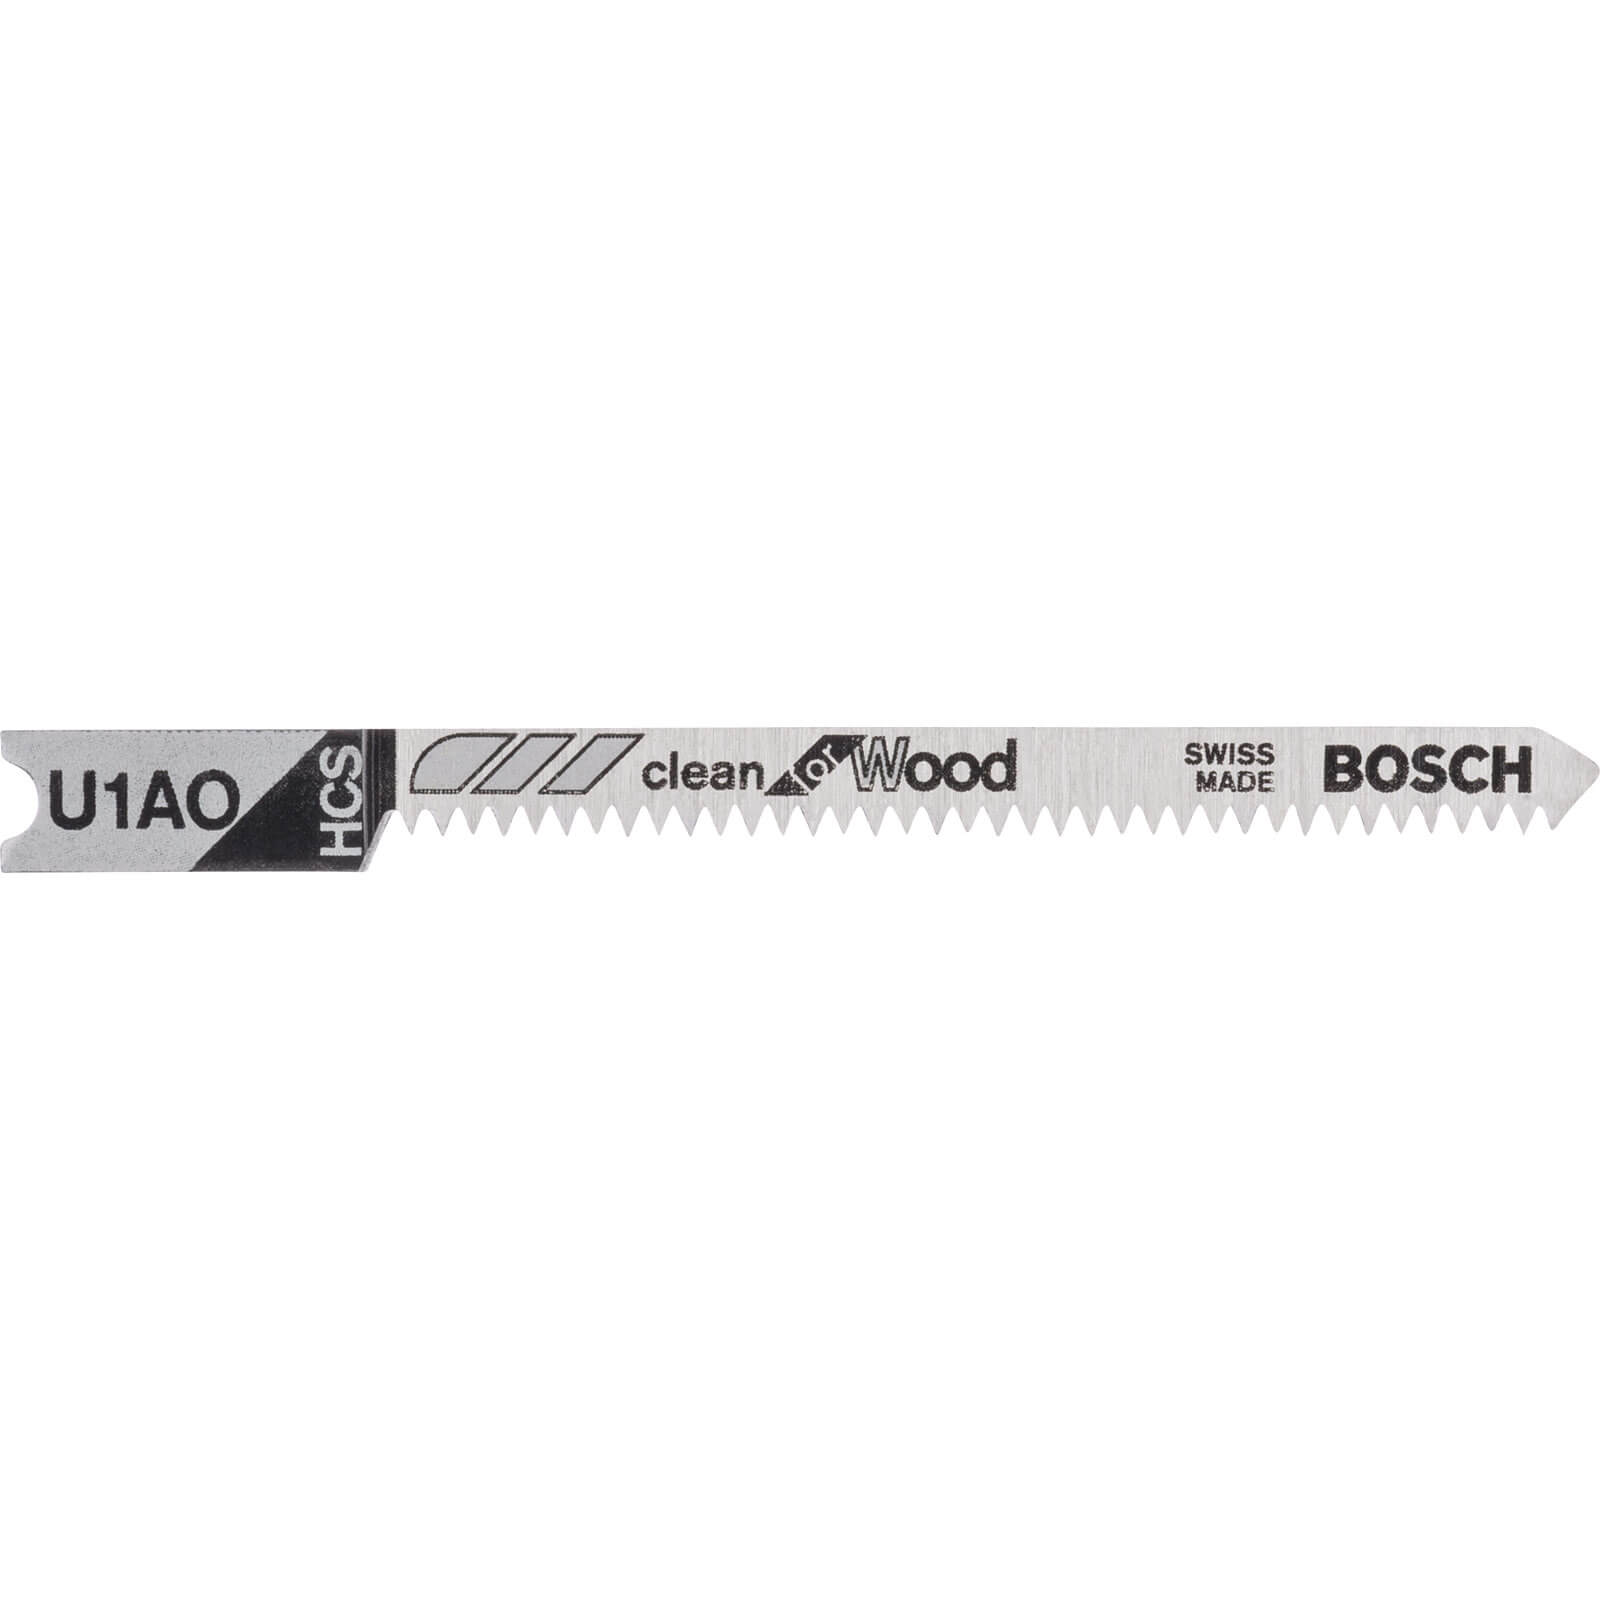 Image of Bosch U1 AO Wood Cutting Jigsaw Blades Pack of 3